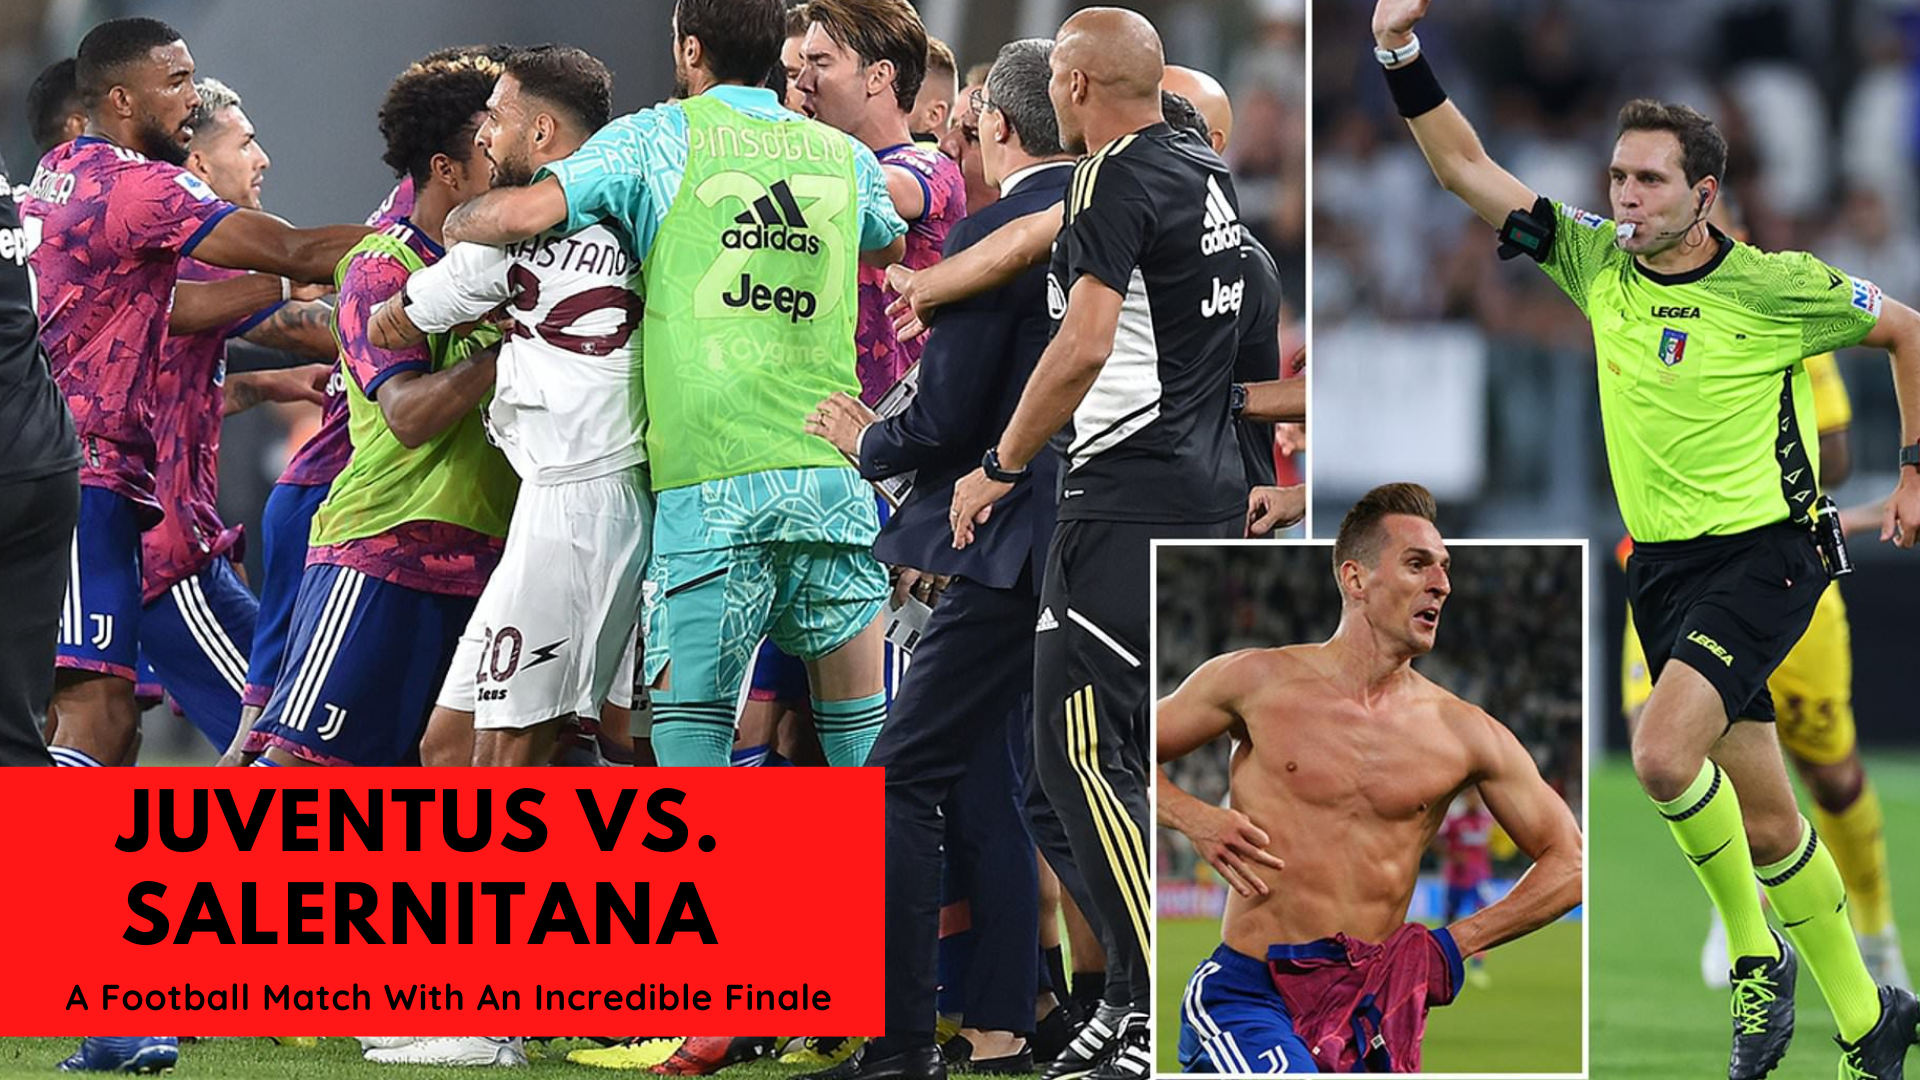 Juventus Vs. Salernitana - A Football Match With An Incredible Finale